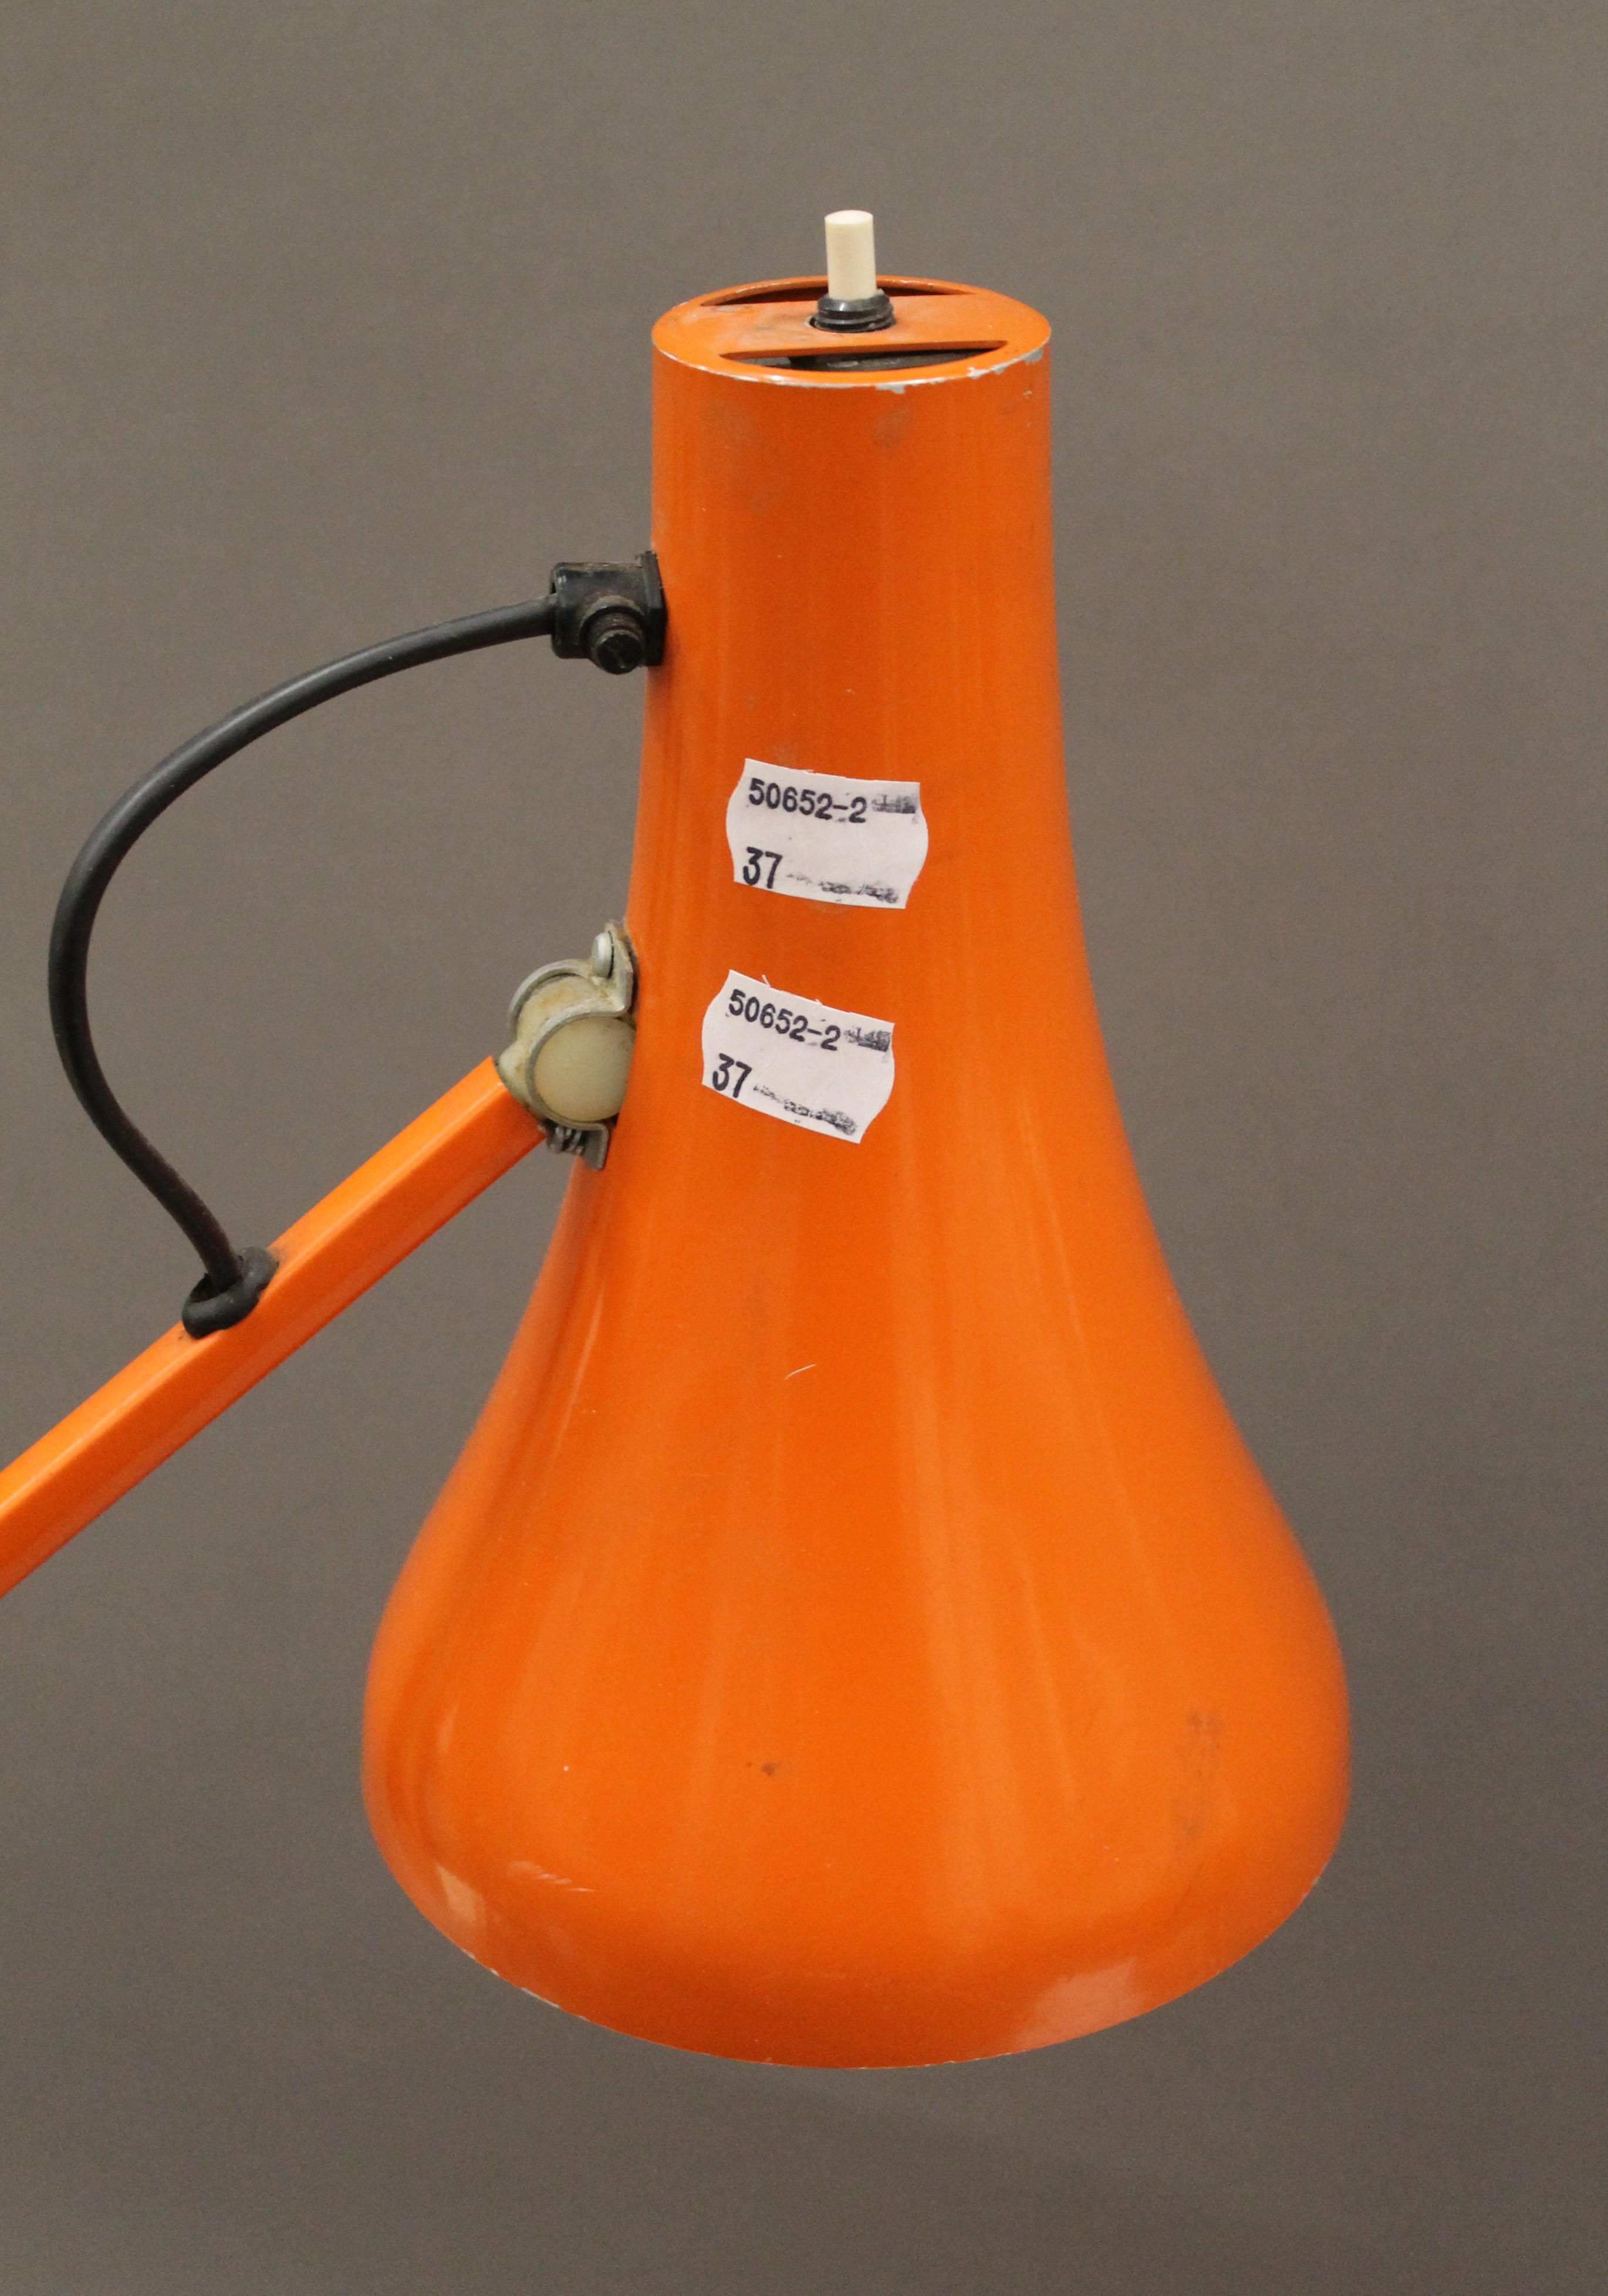 An orange angle poise lamp. - Image 2 of 3